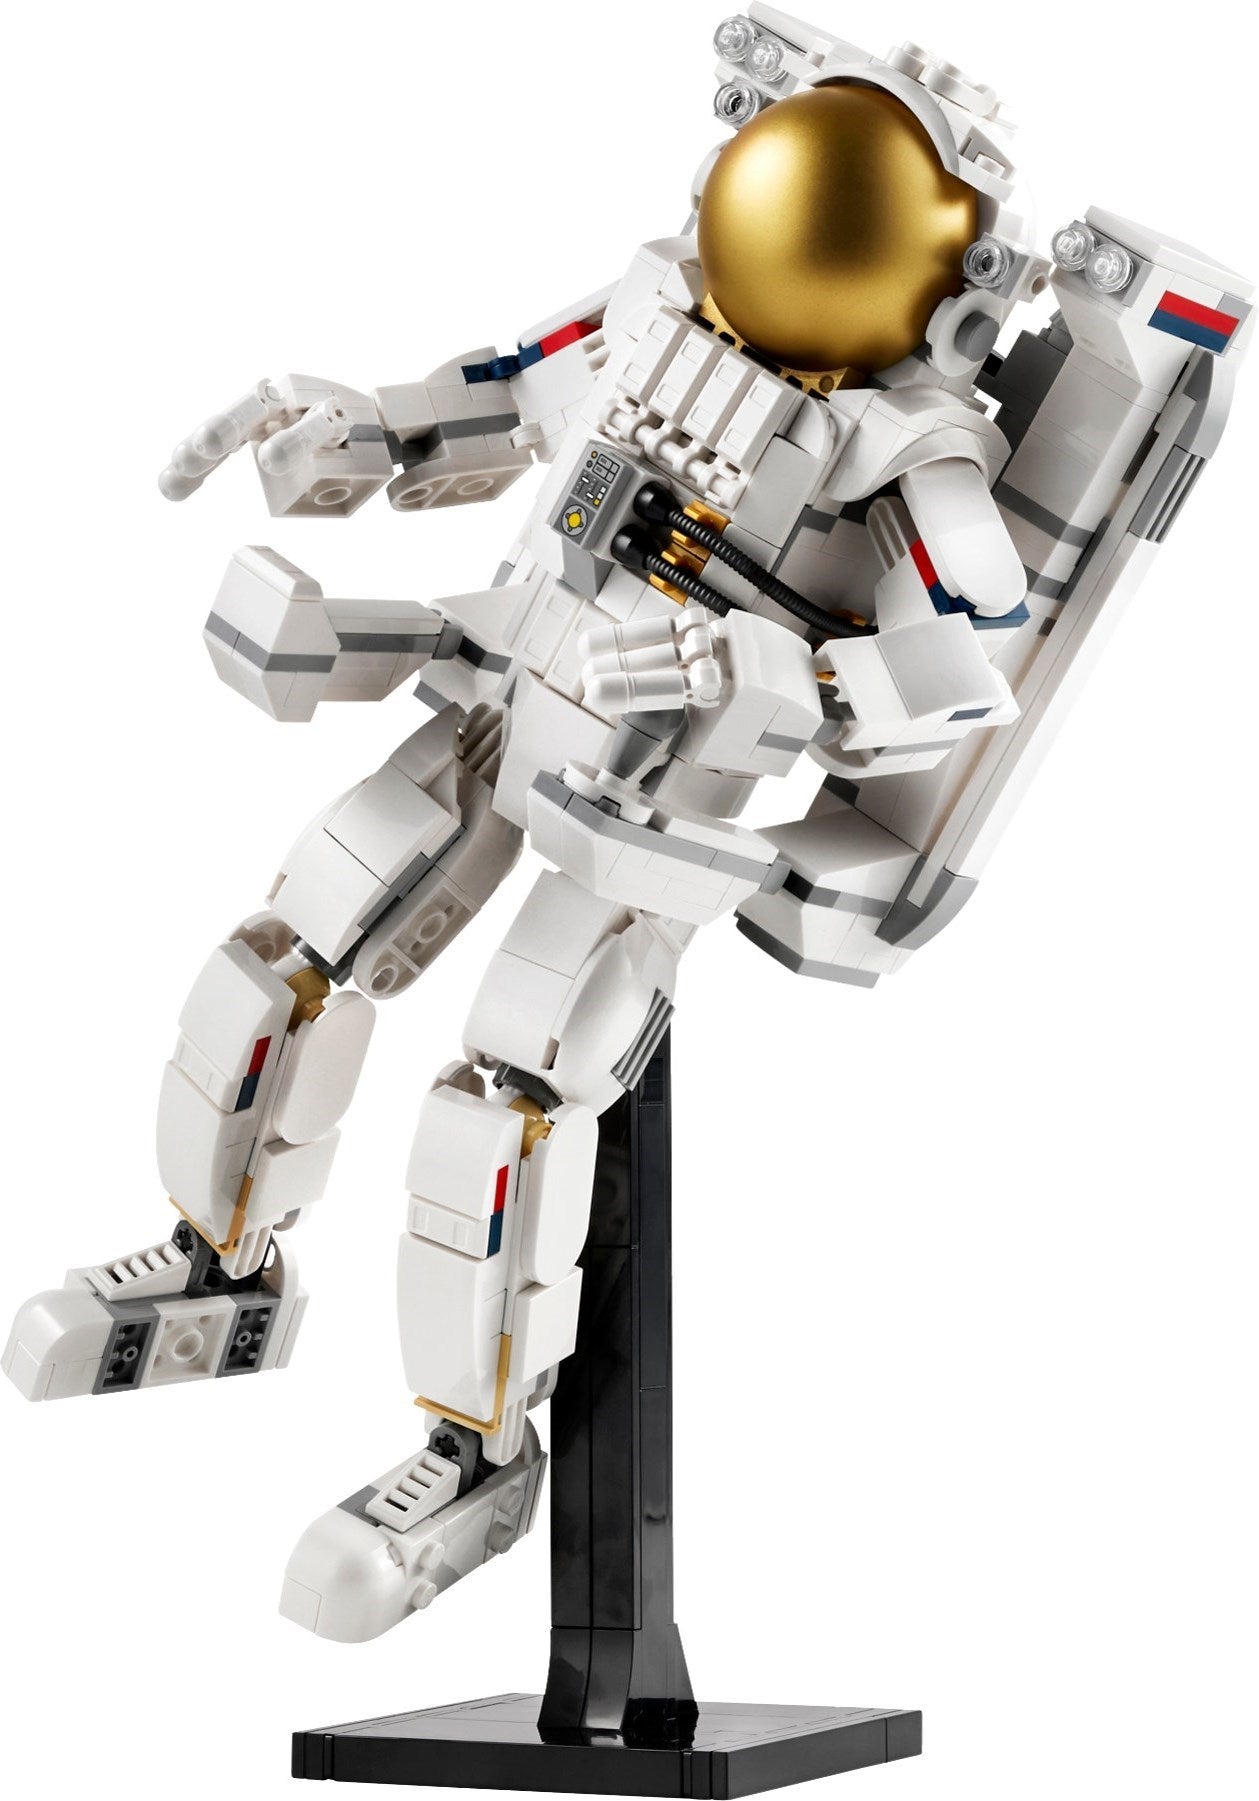 LEGO 31152 Space Astronaut